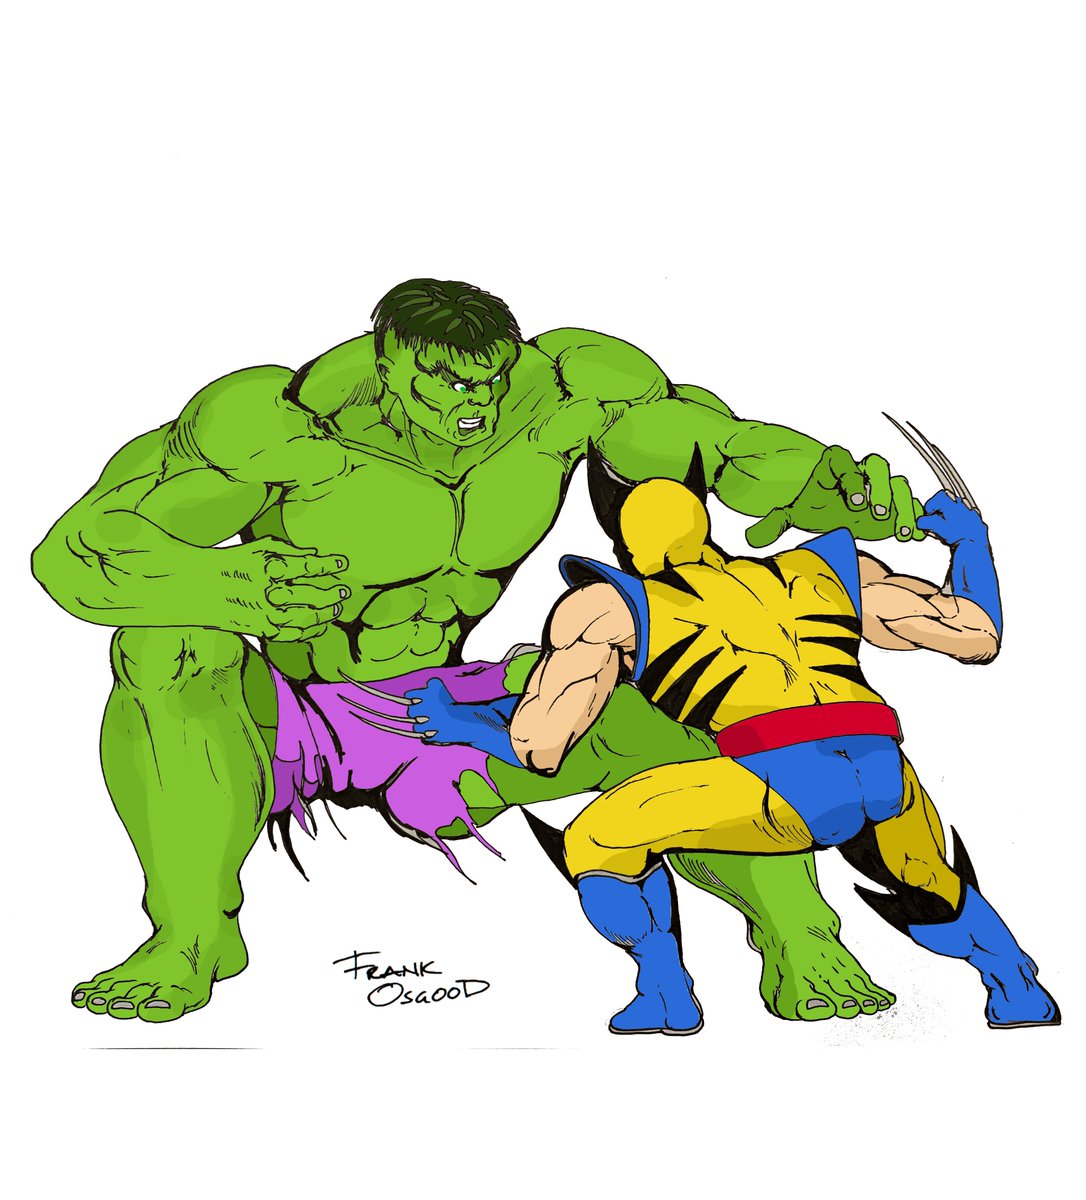 Wolvie vs Hulk #marvel #marveluniverse #wolverine #marvelfanart #marvelcomics #thehulk #incrediblehulk #comic #comics #comicart #comicartist #comicartists #frankosgoodcomix #osgoodcomix #marvelcomicsfanart #hulkfanart #wolverinefanart #xmen #xmenfanart